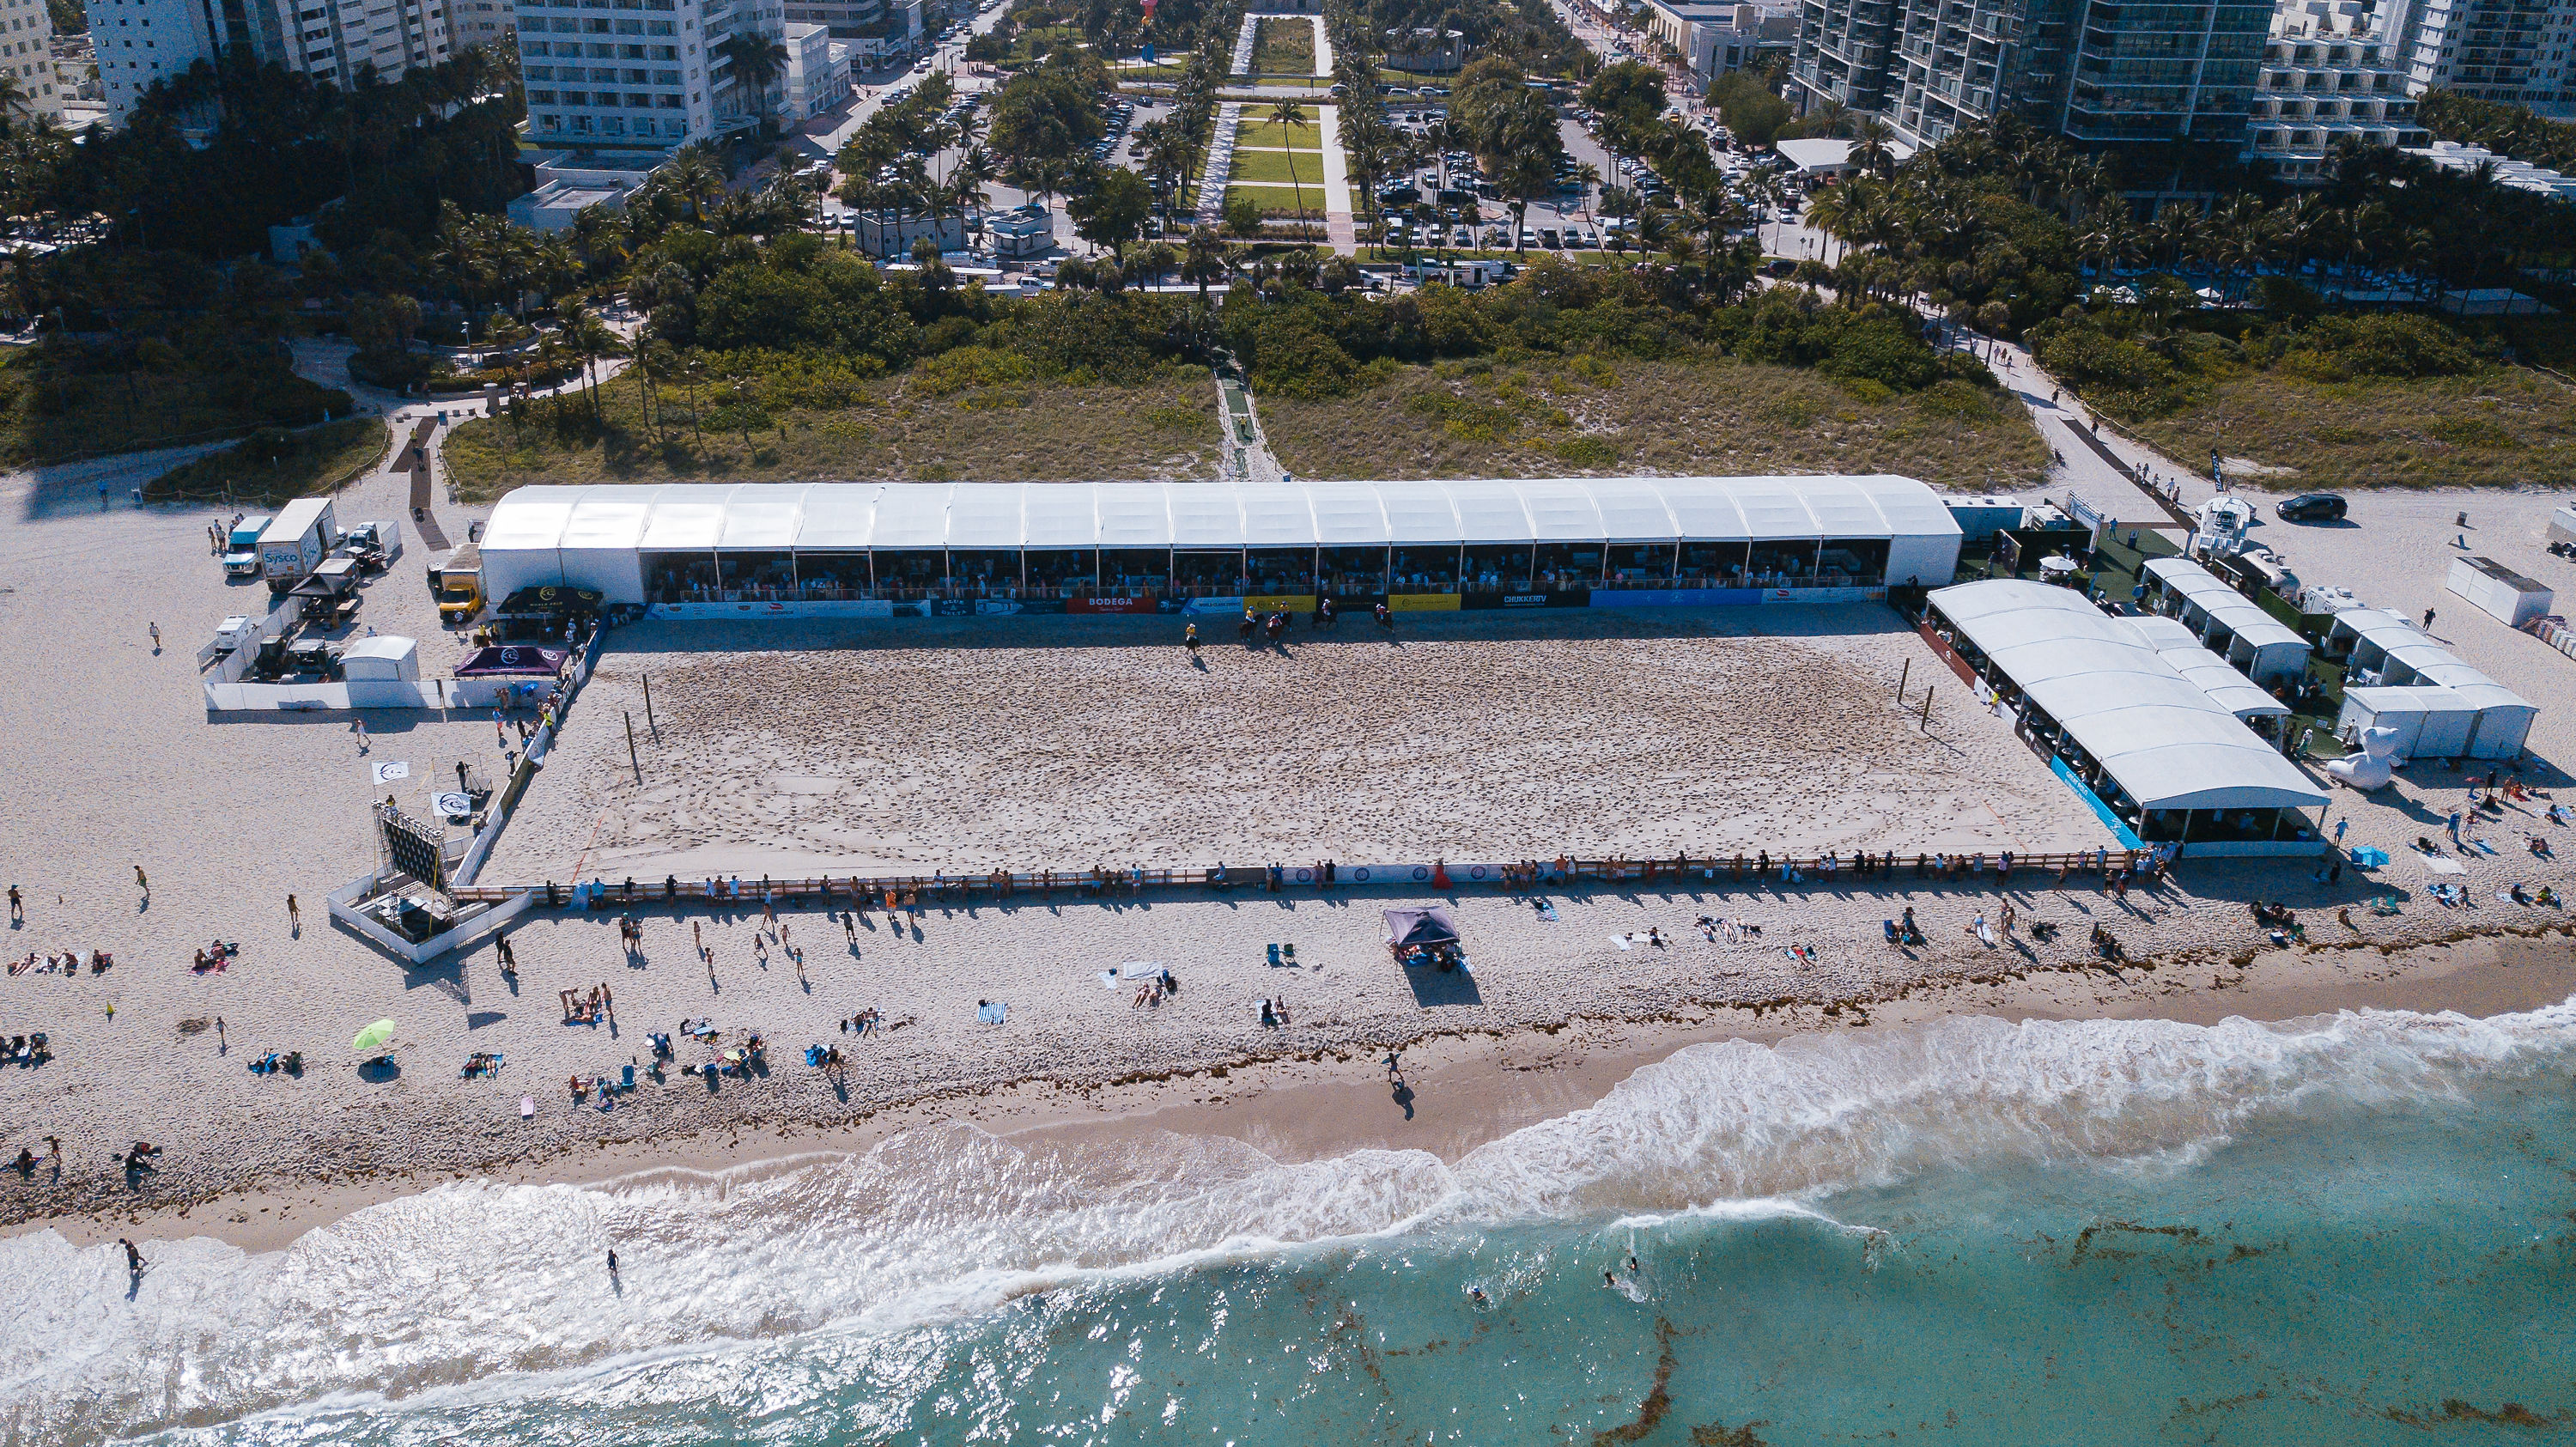 World Polo League Beach Polo World Cup returns to Miami Beach